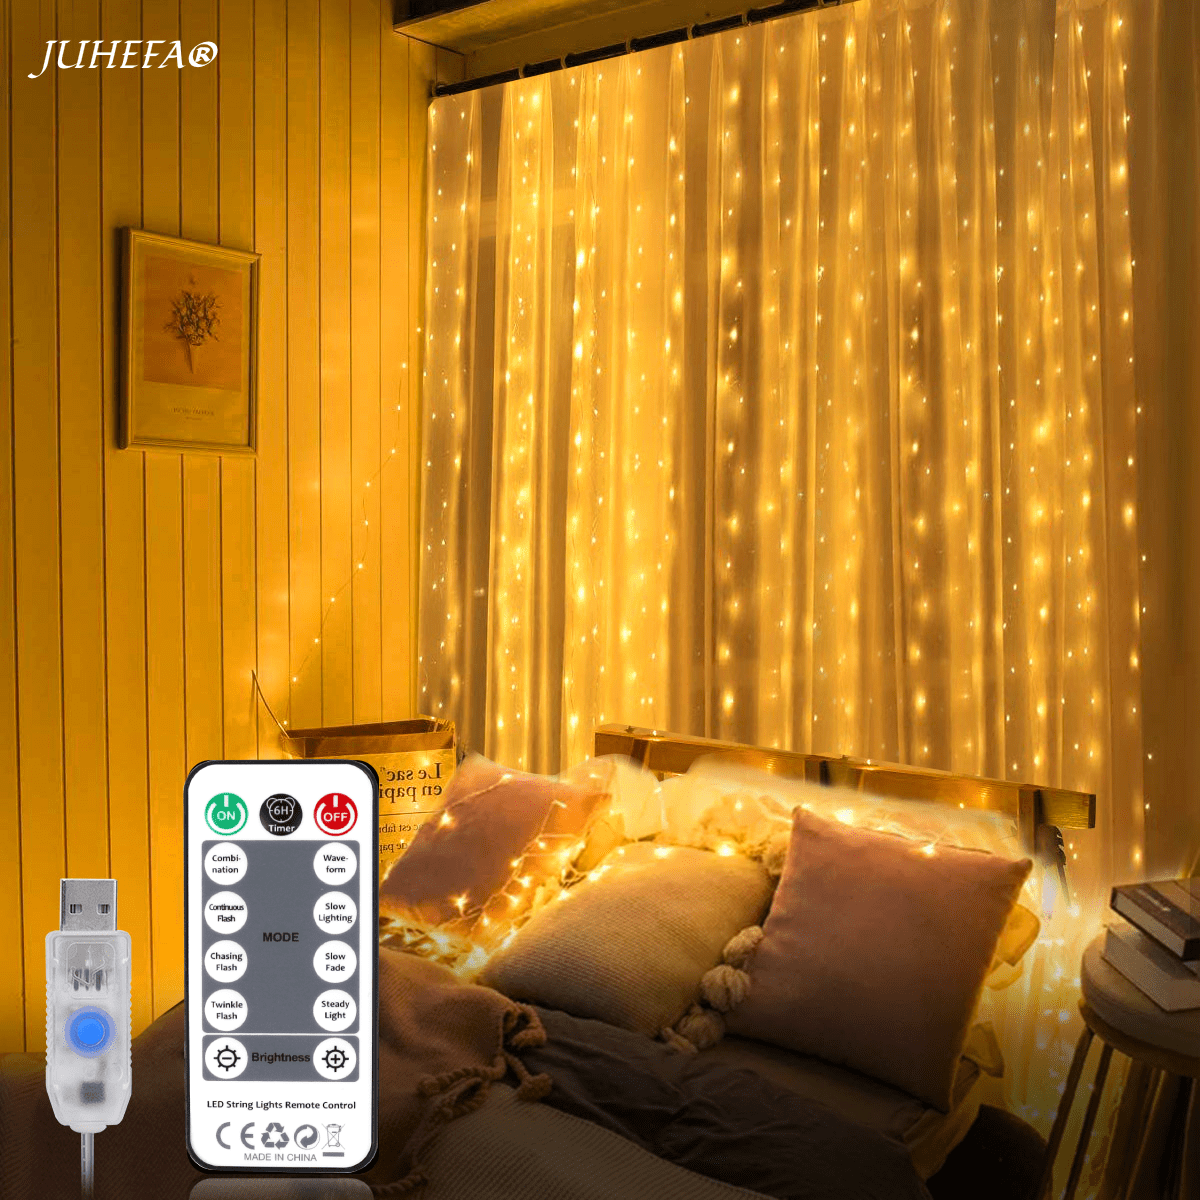 Juhefa String Lights Lights with Remote,7.9' L x 5.9' W 144-Bulb USB Plug-in Light for Wedding Home Bedroom Decor,Warm White